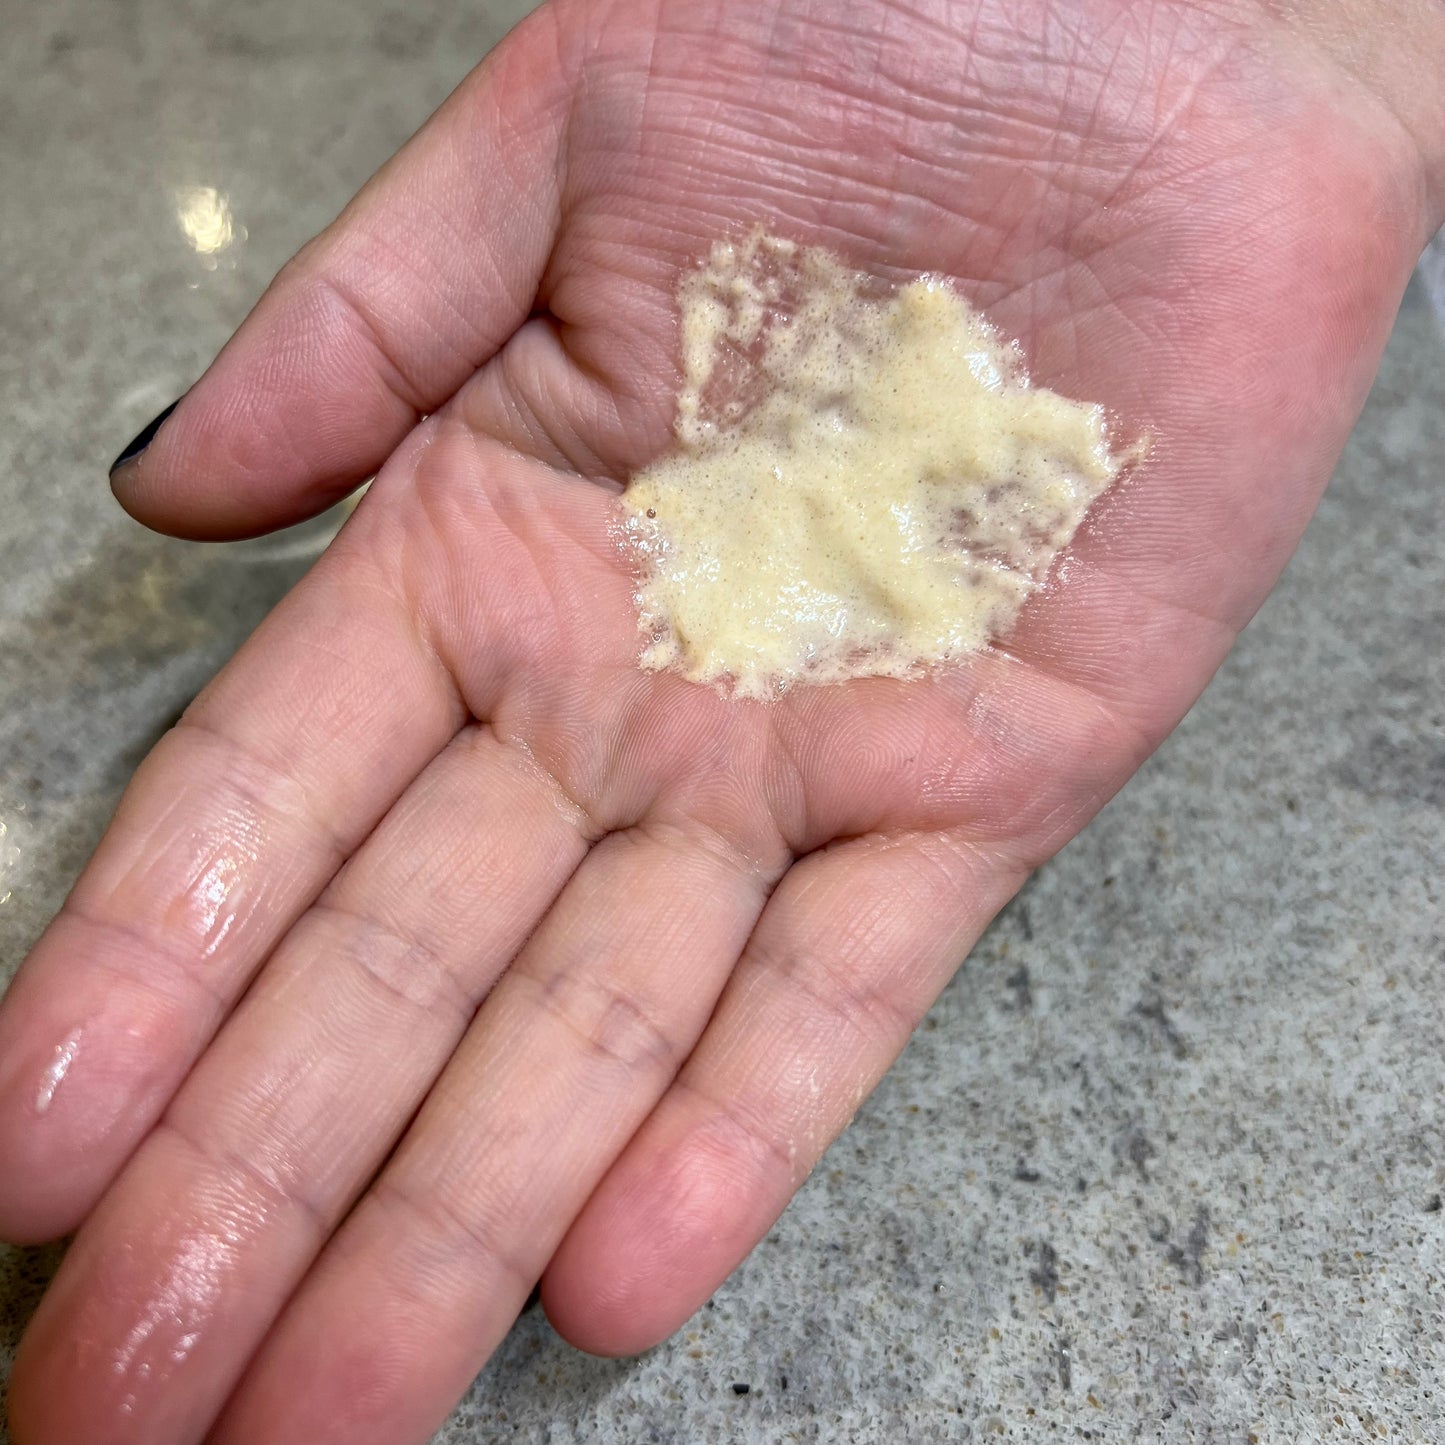 dermalogica daily milkfoliant exfoliating powder on hand